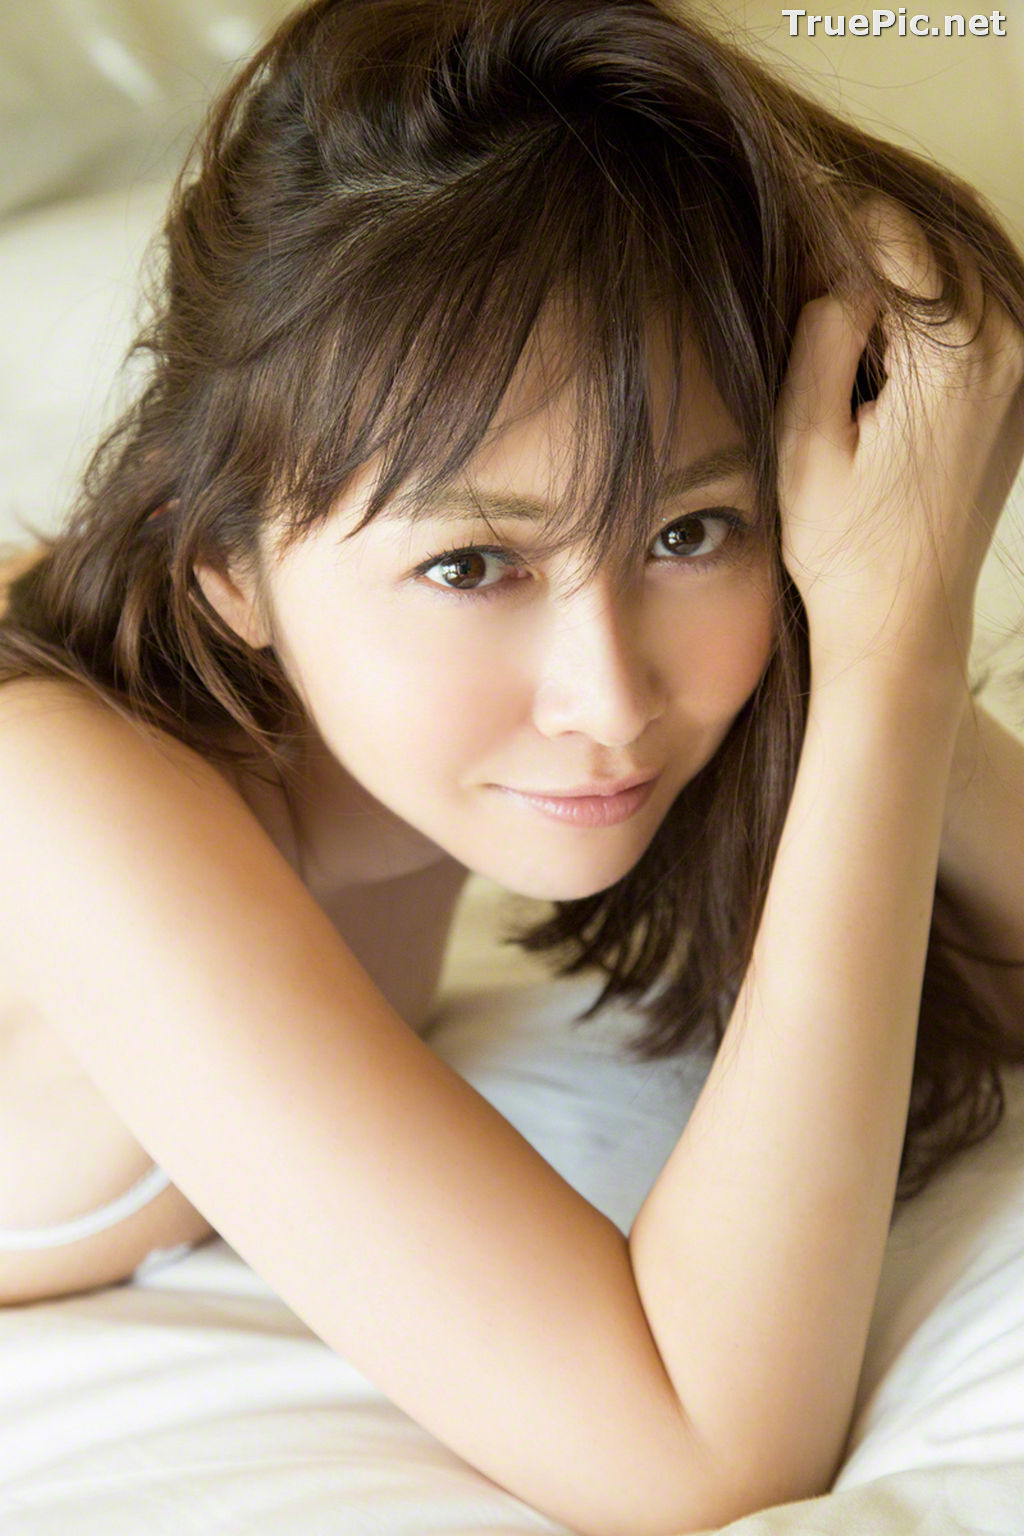 [YS Web] Vol.372 - Japanese Gravure Idol - Megumi Hara - TruePic.net